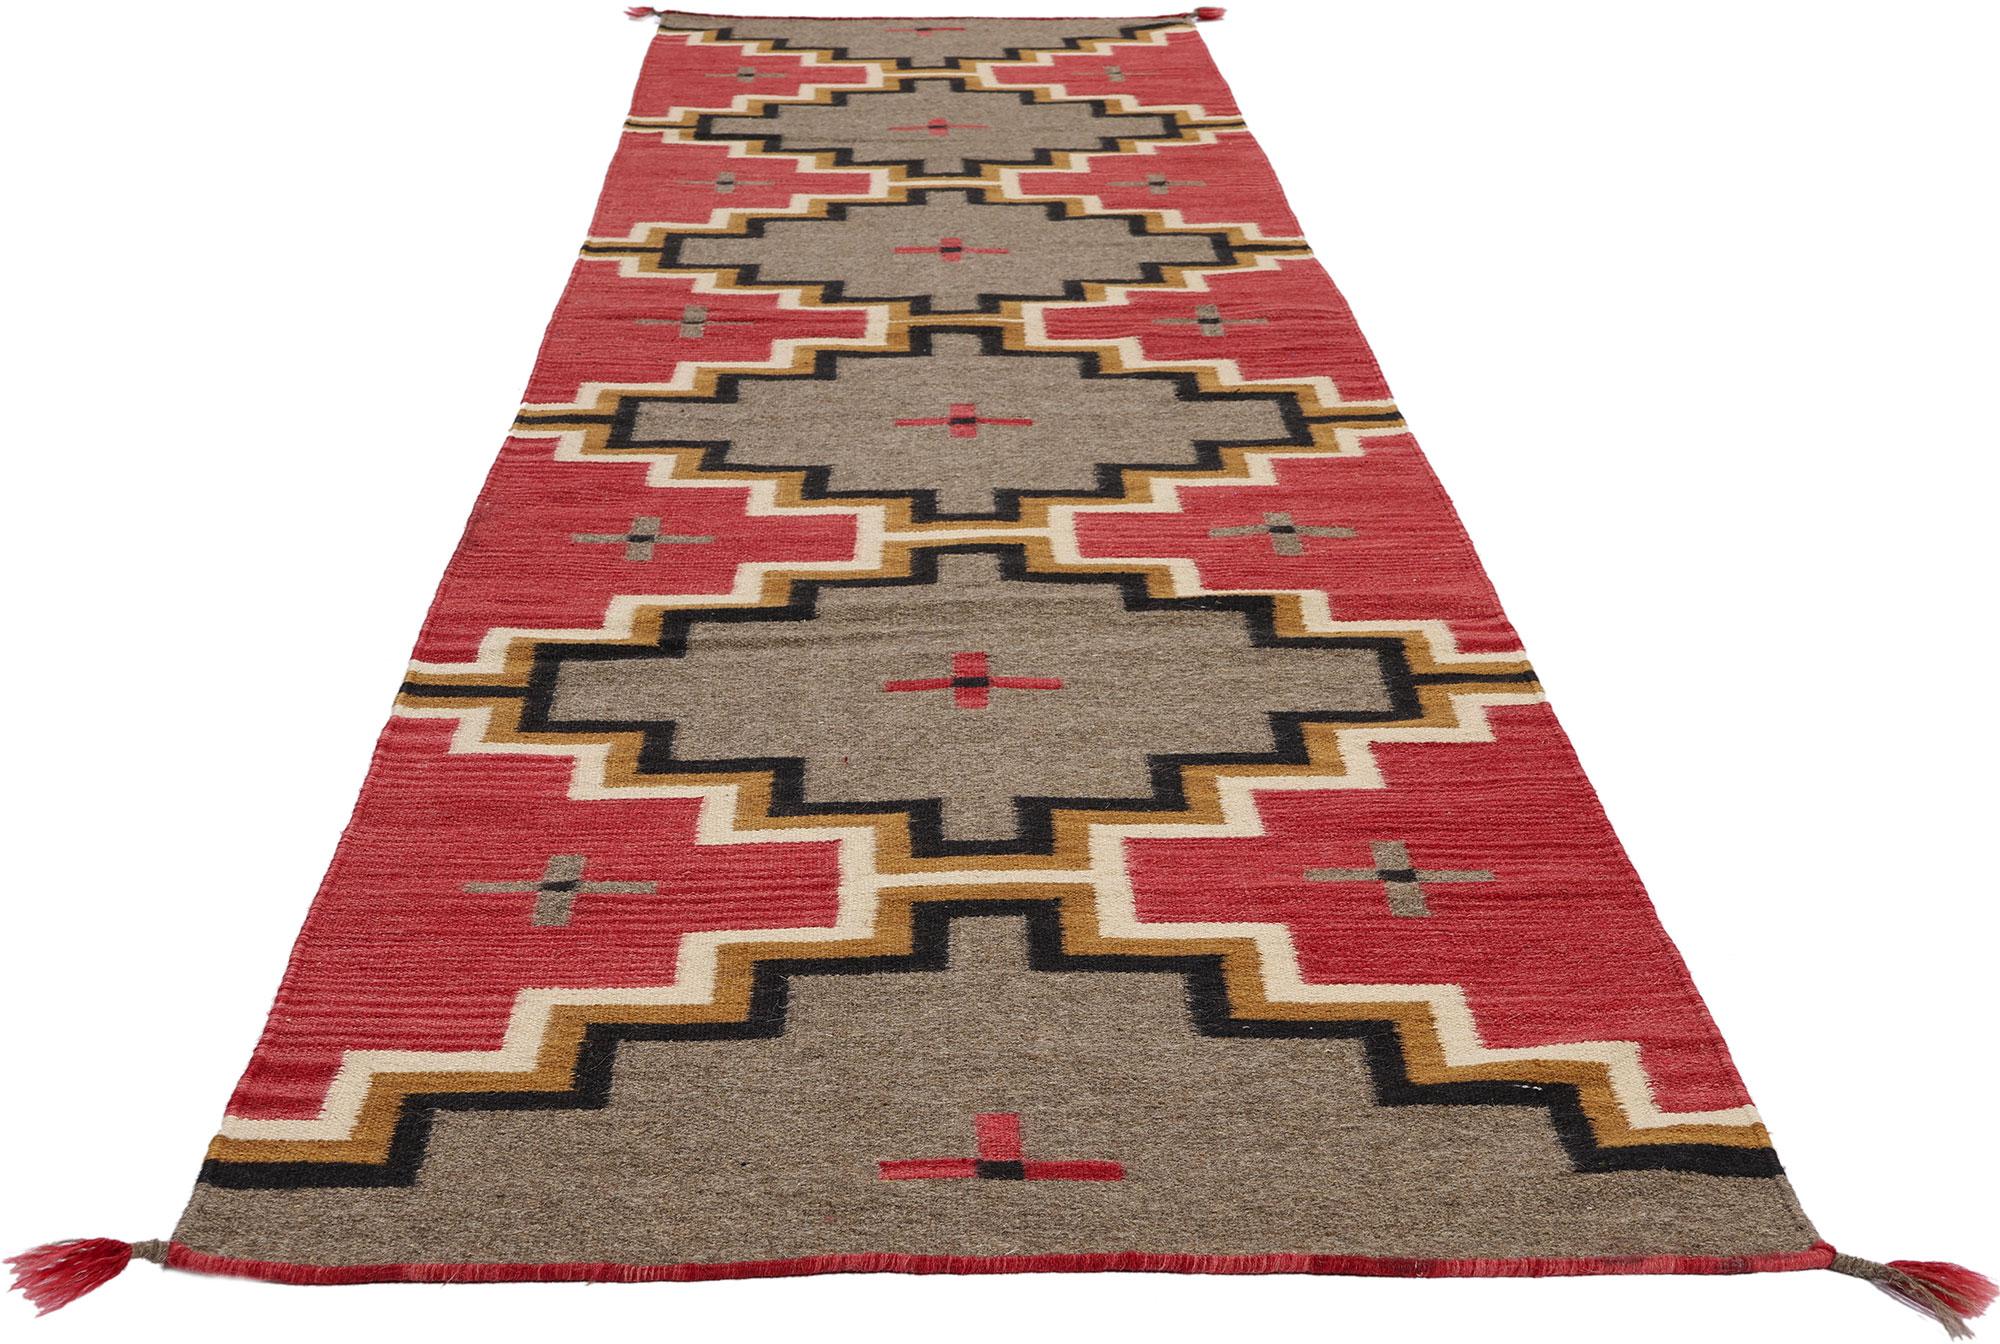 Sud-asiatique Tapis contemporain Santa Fe Southwest Modern Ganado Navajo-Style en vente